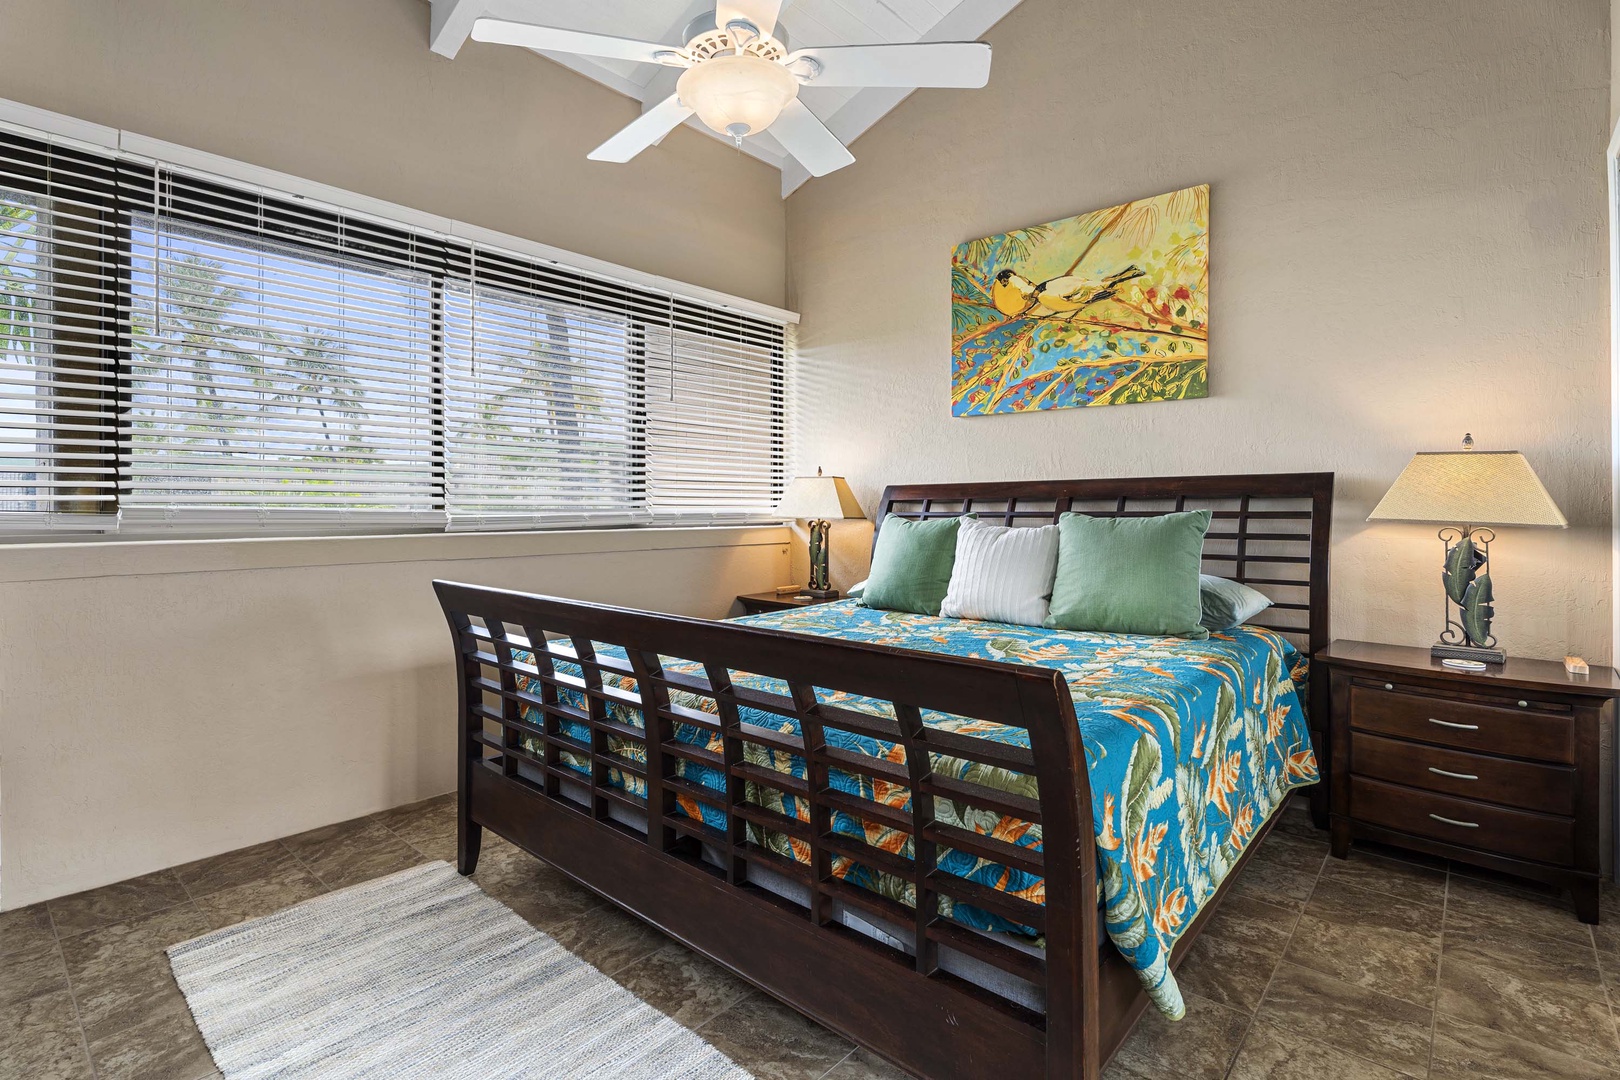 Kailua Kona Vacation Rentals, Kona Makai 6303 - Welcome to the island themed primary bedroom!